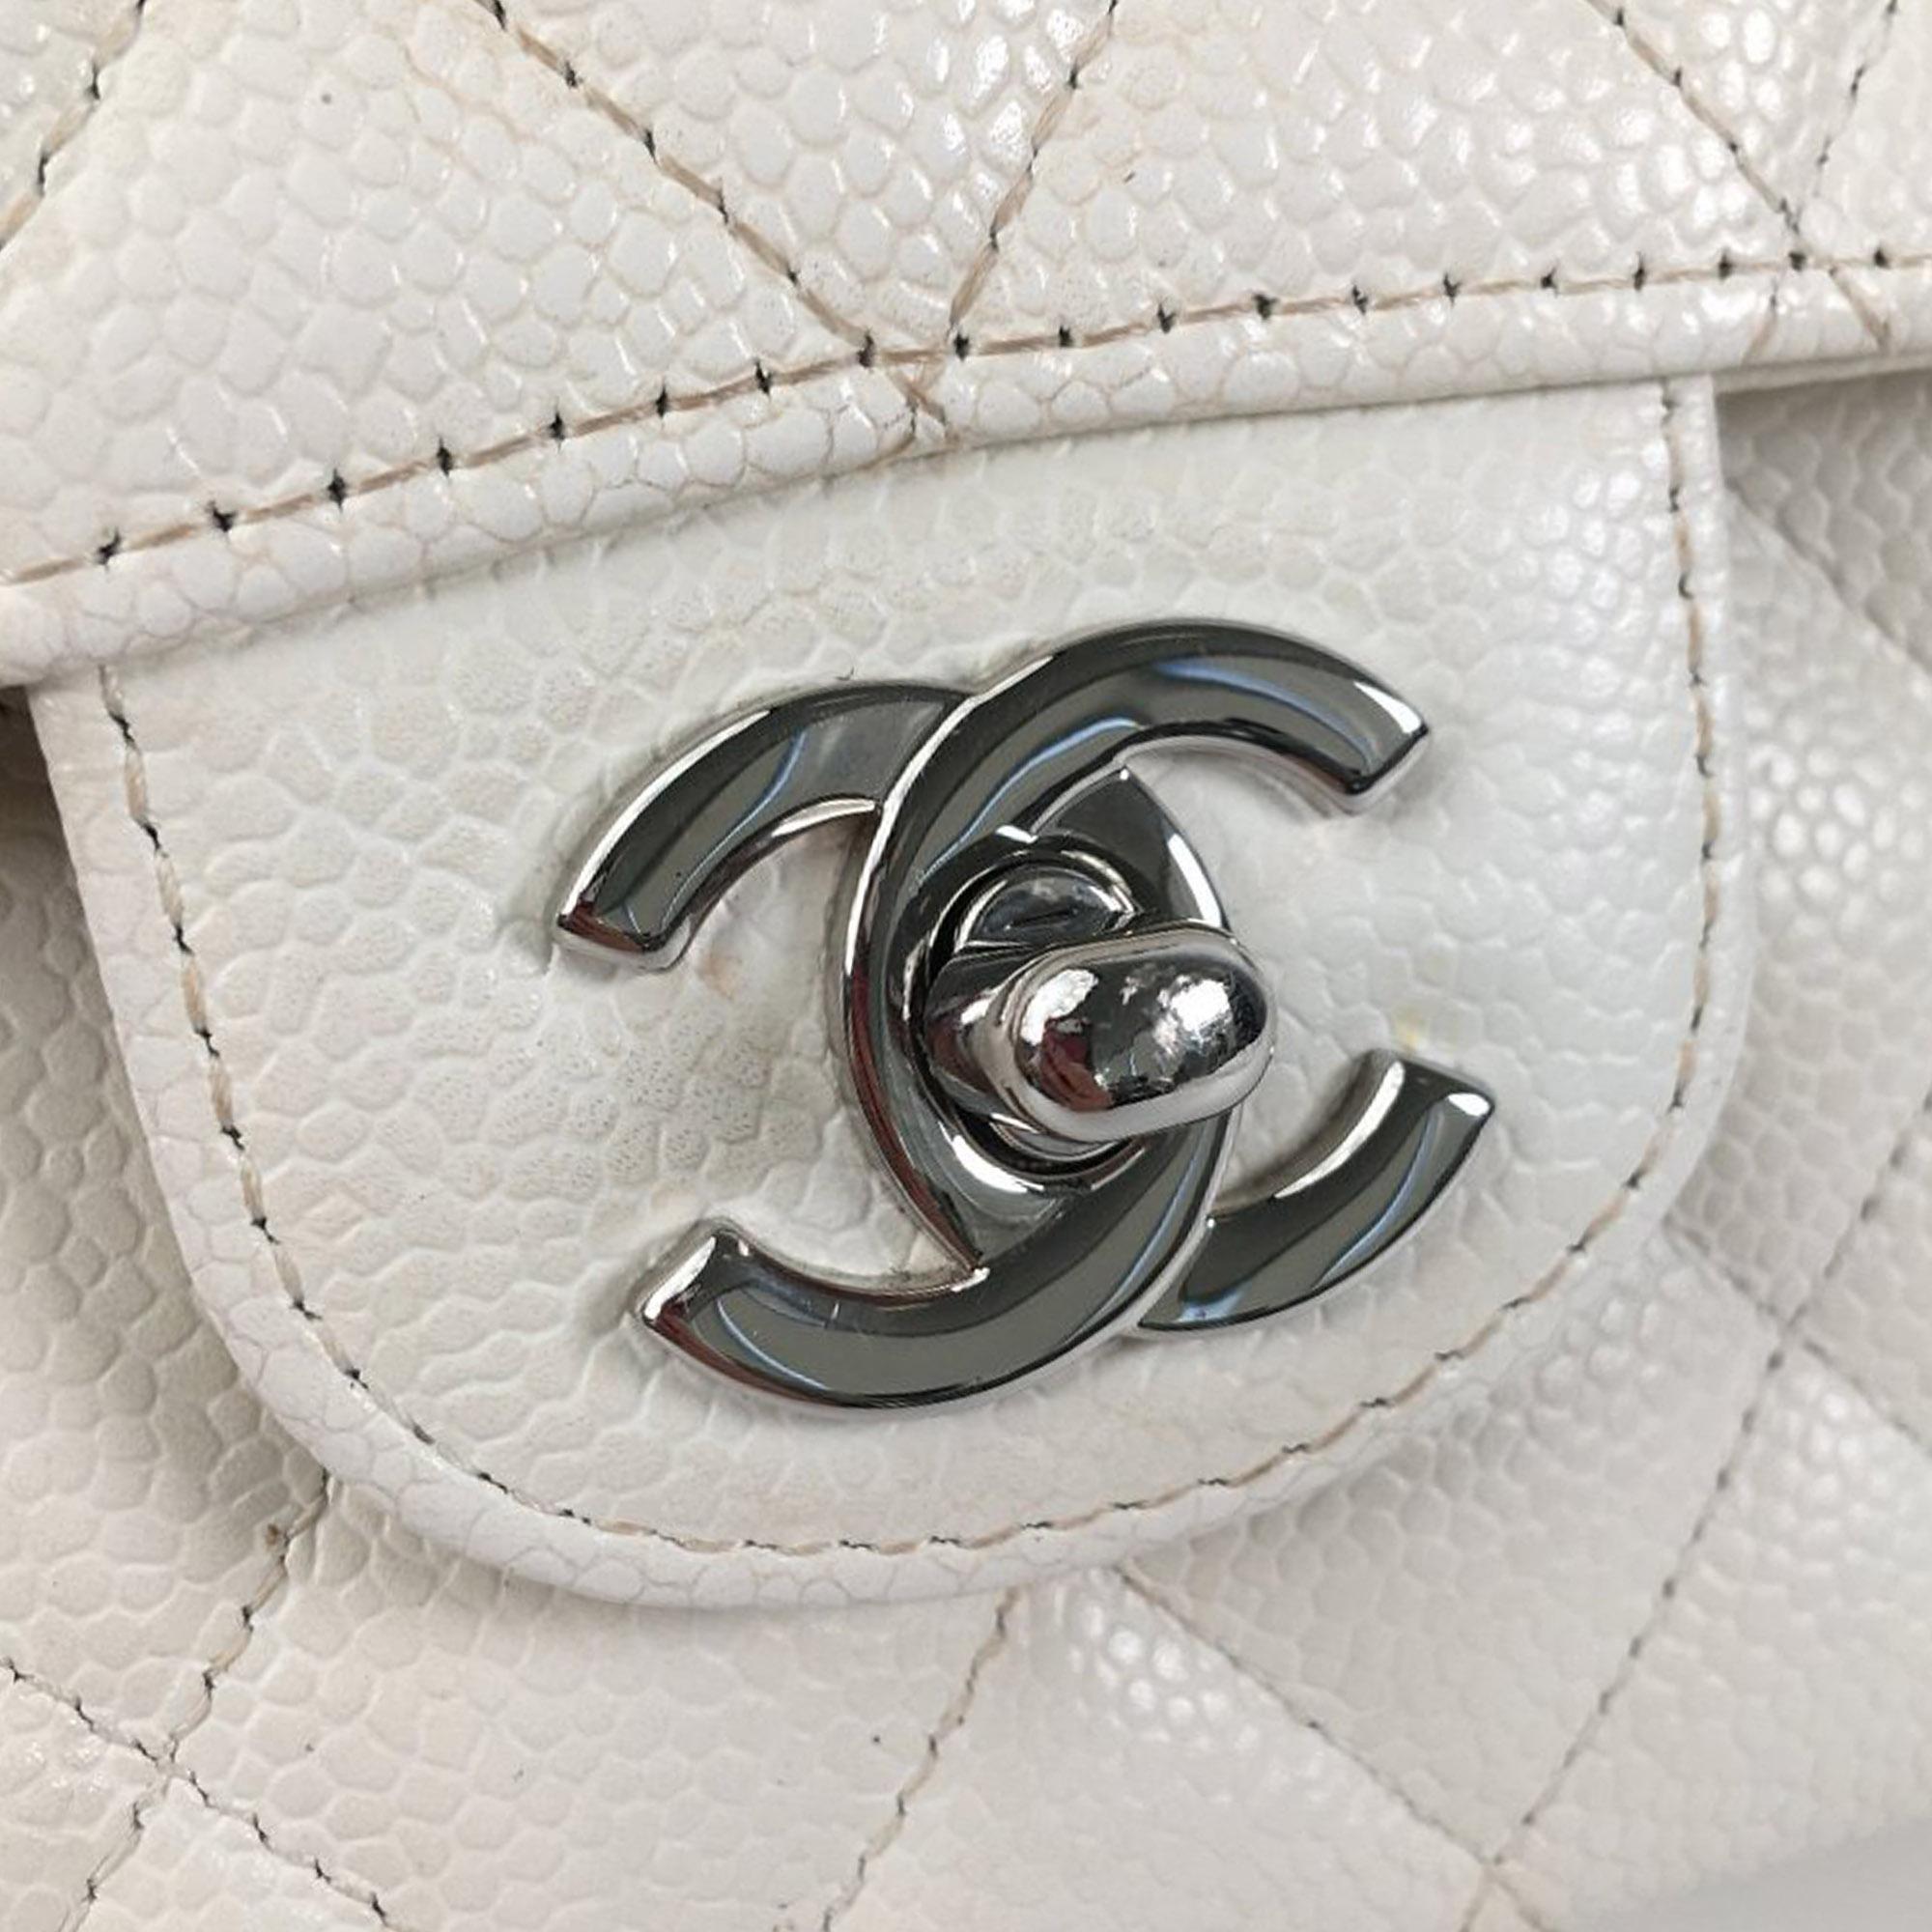 Chanel White Medium Classic Caviar Double Flap Bag